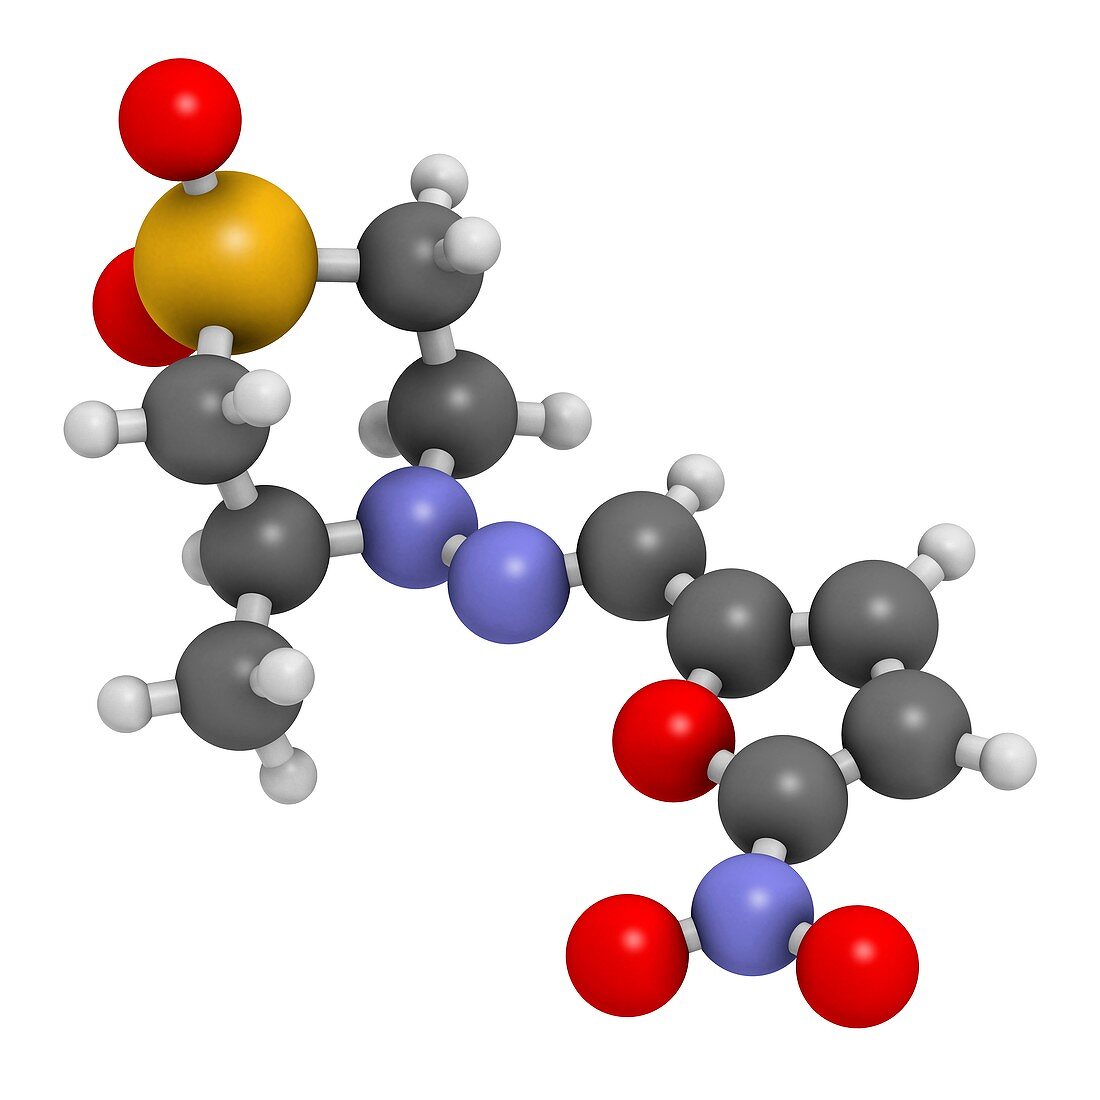 Nifurtimox antiparasitic drug molecule